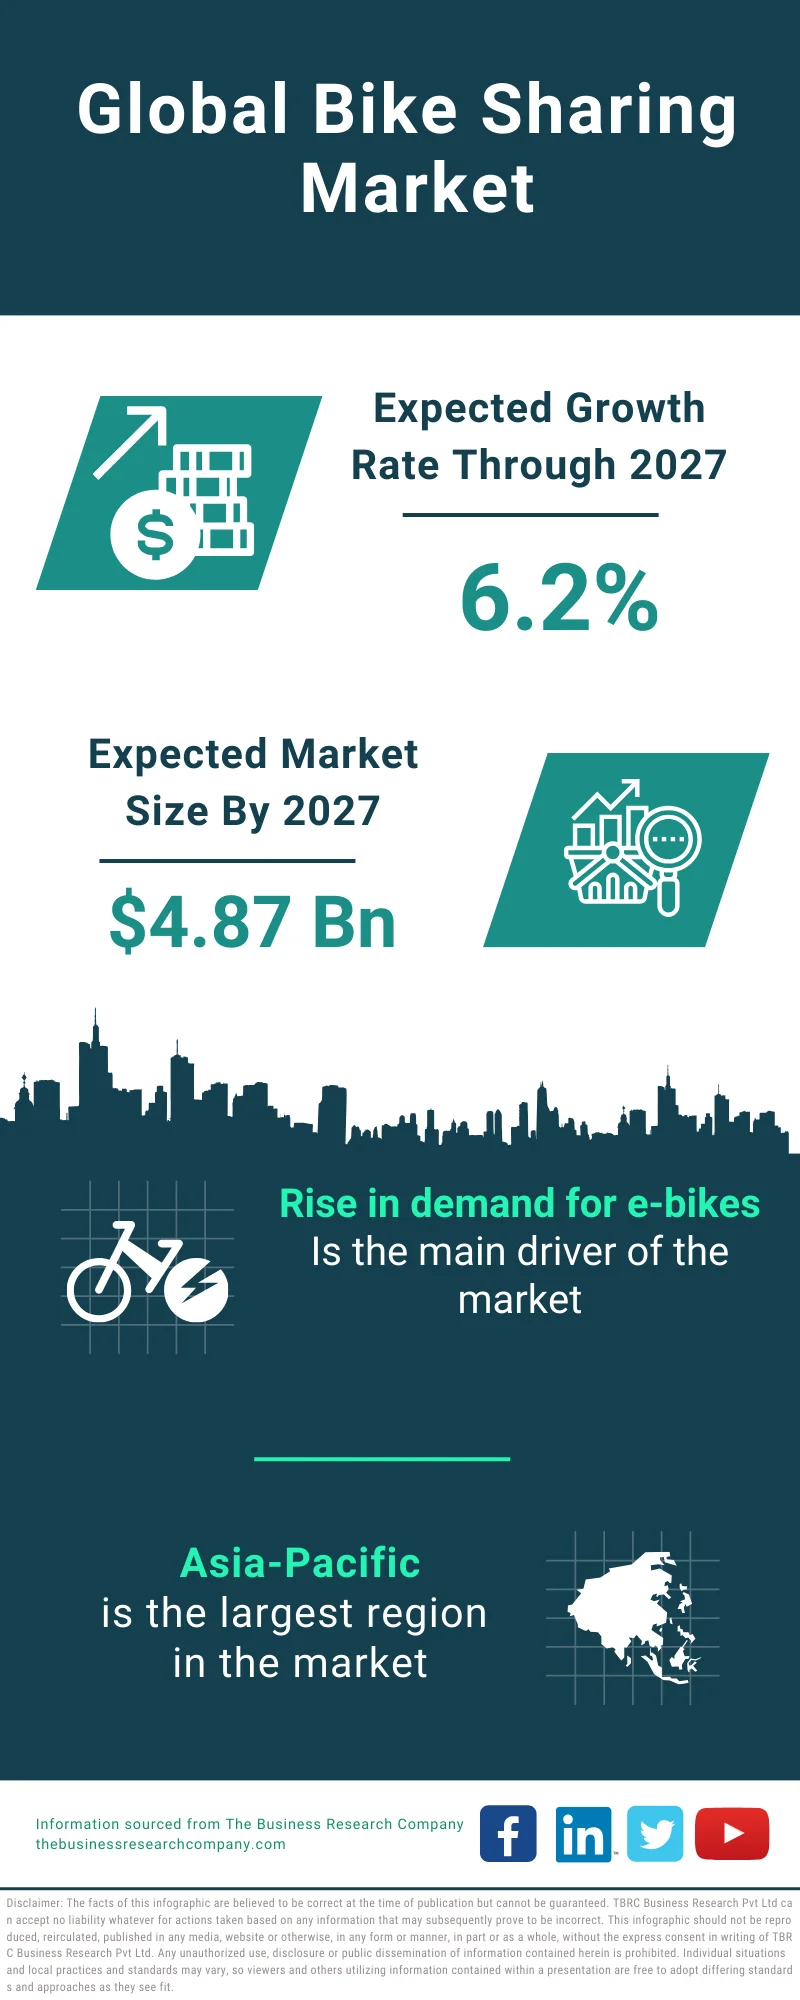 Bike Sharing Global Market Report 2023